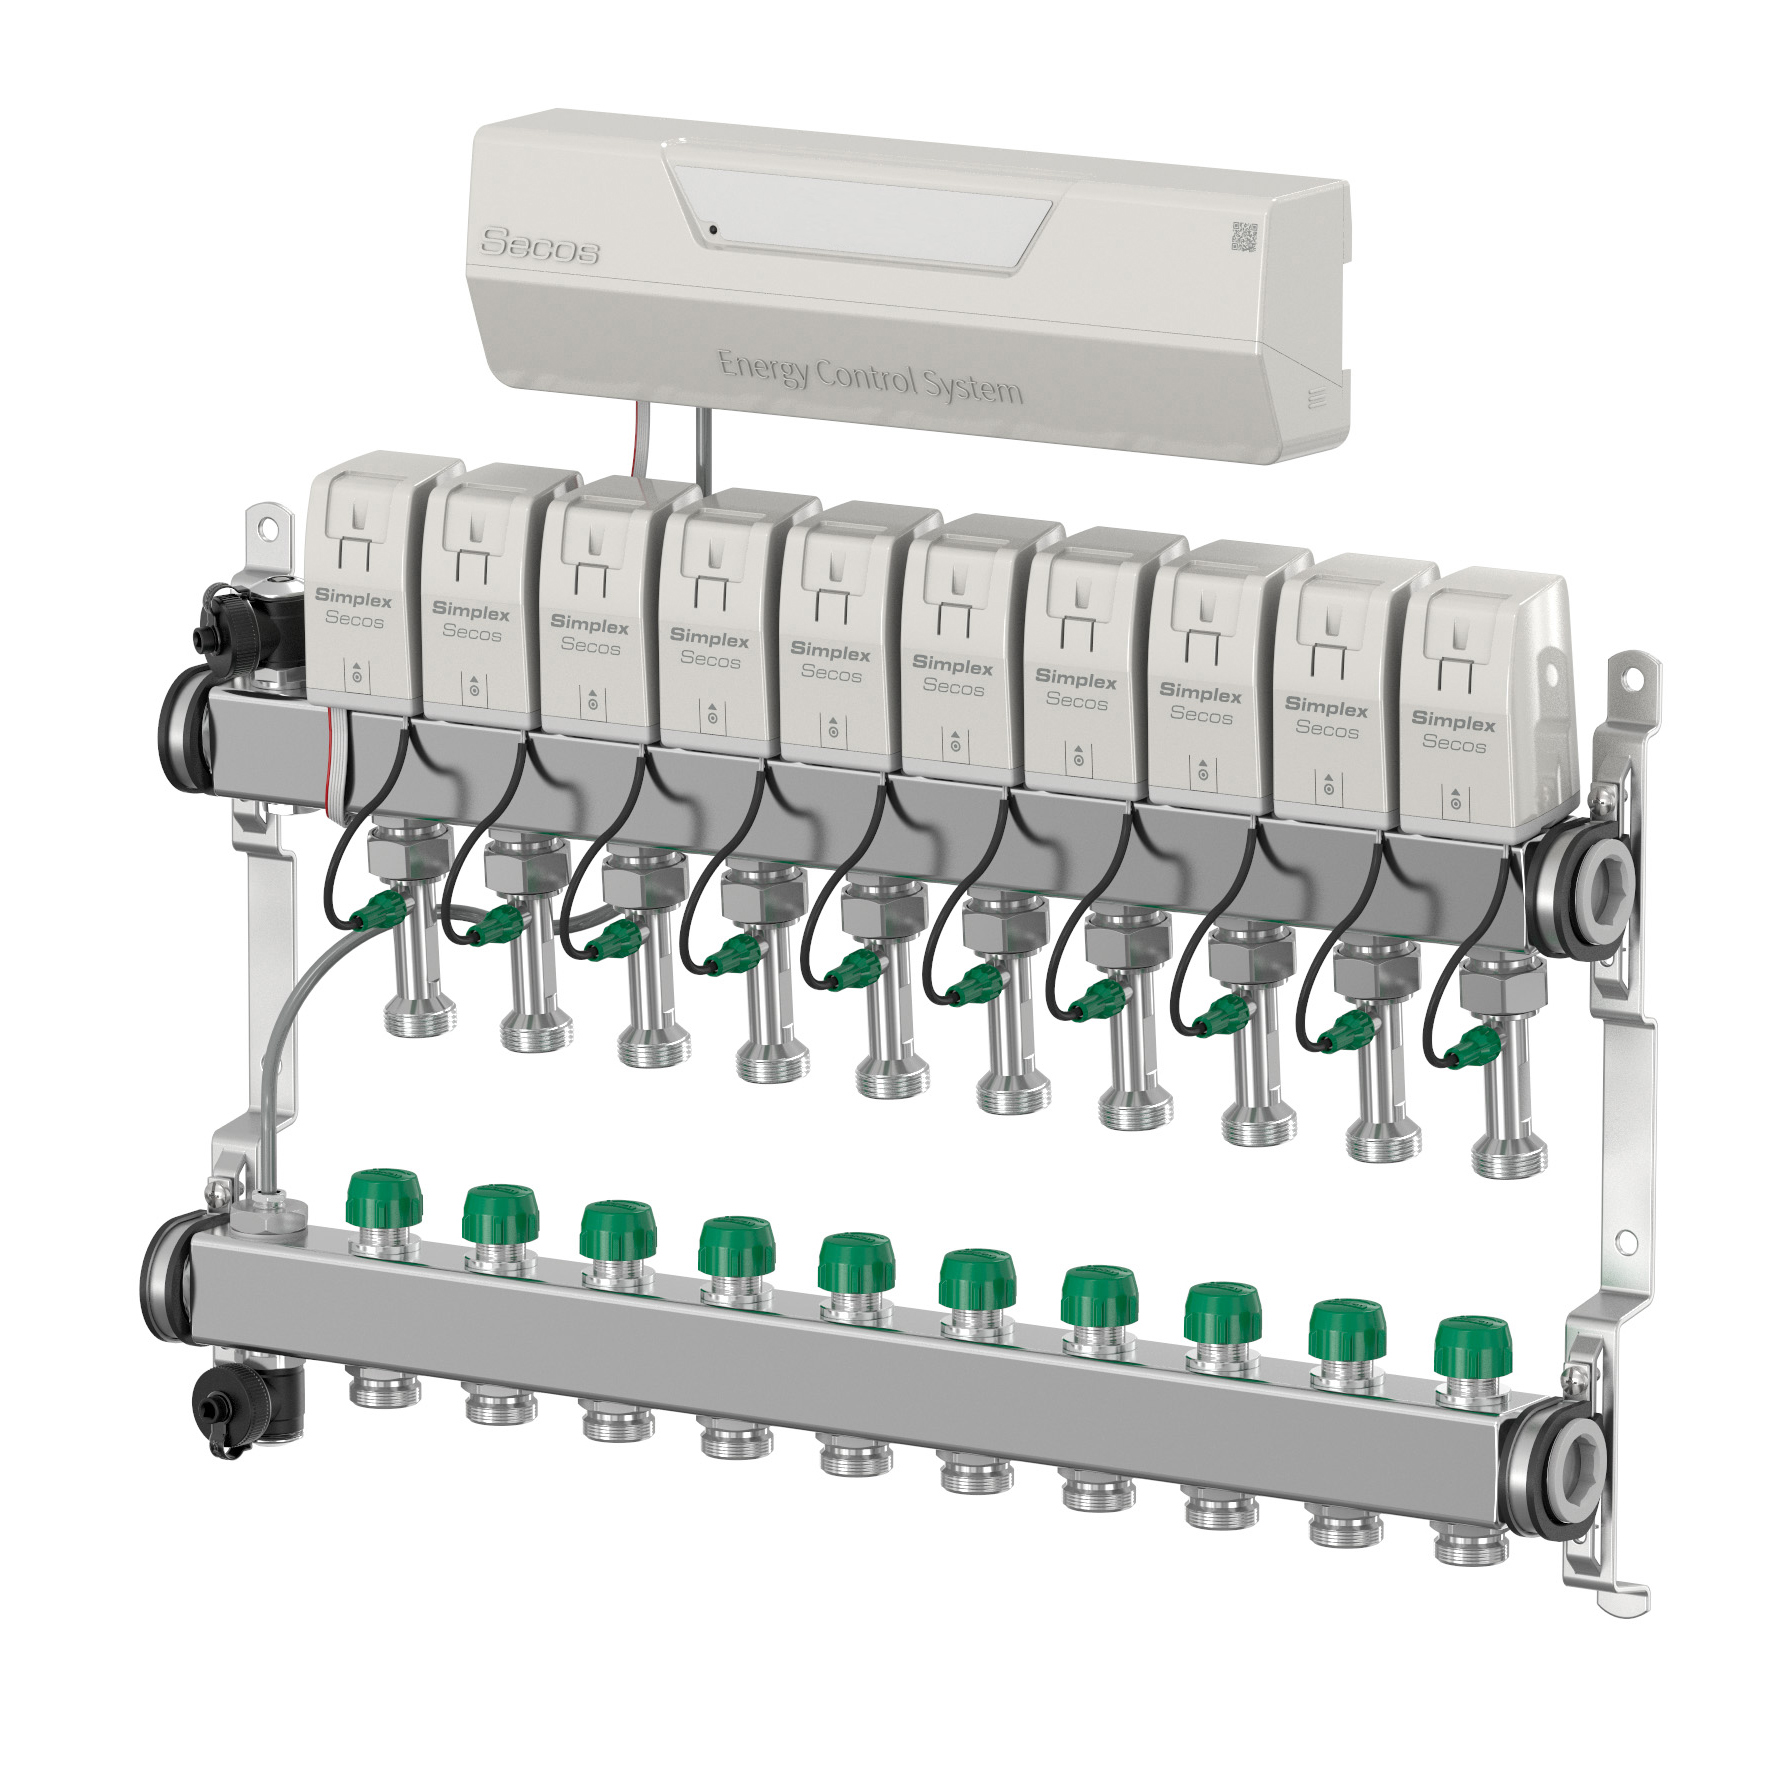 Secos - Simplex Energy Control System